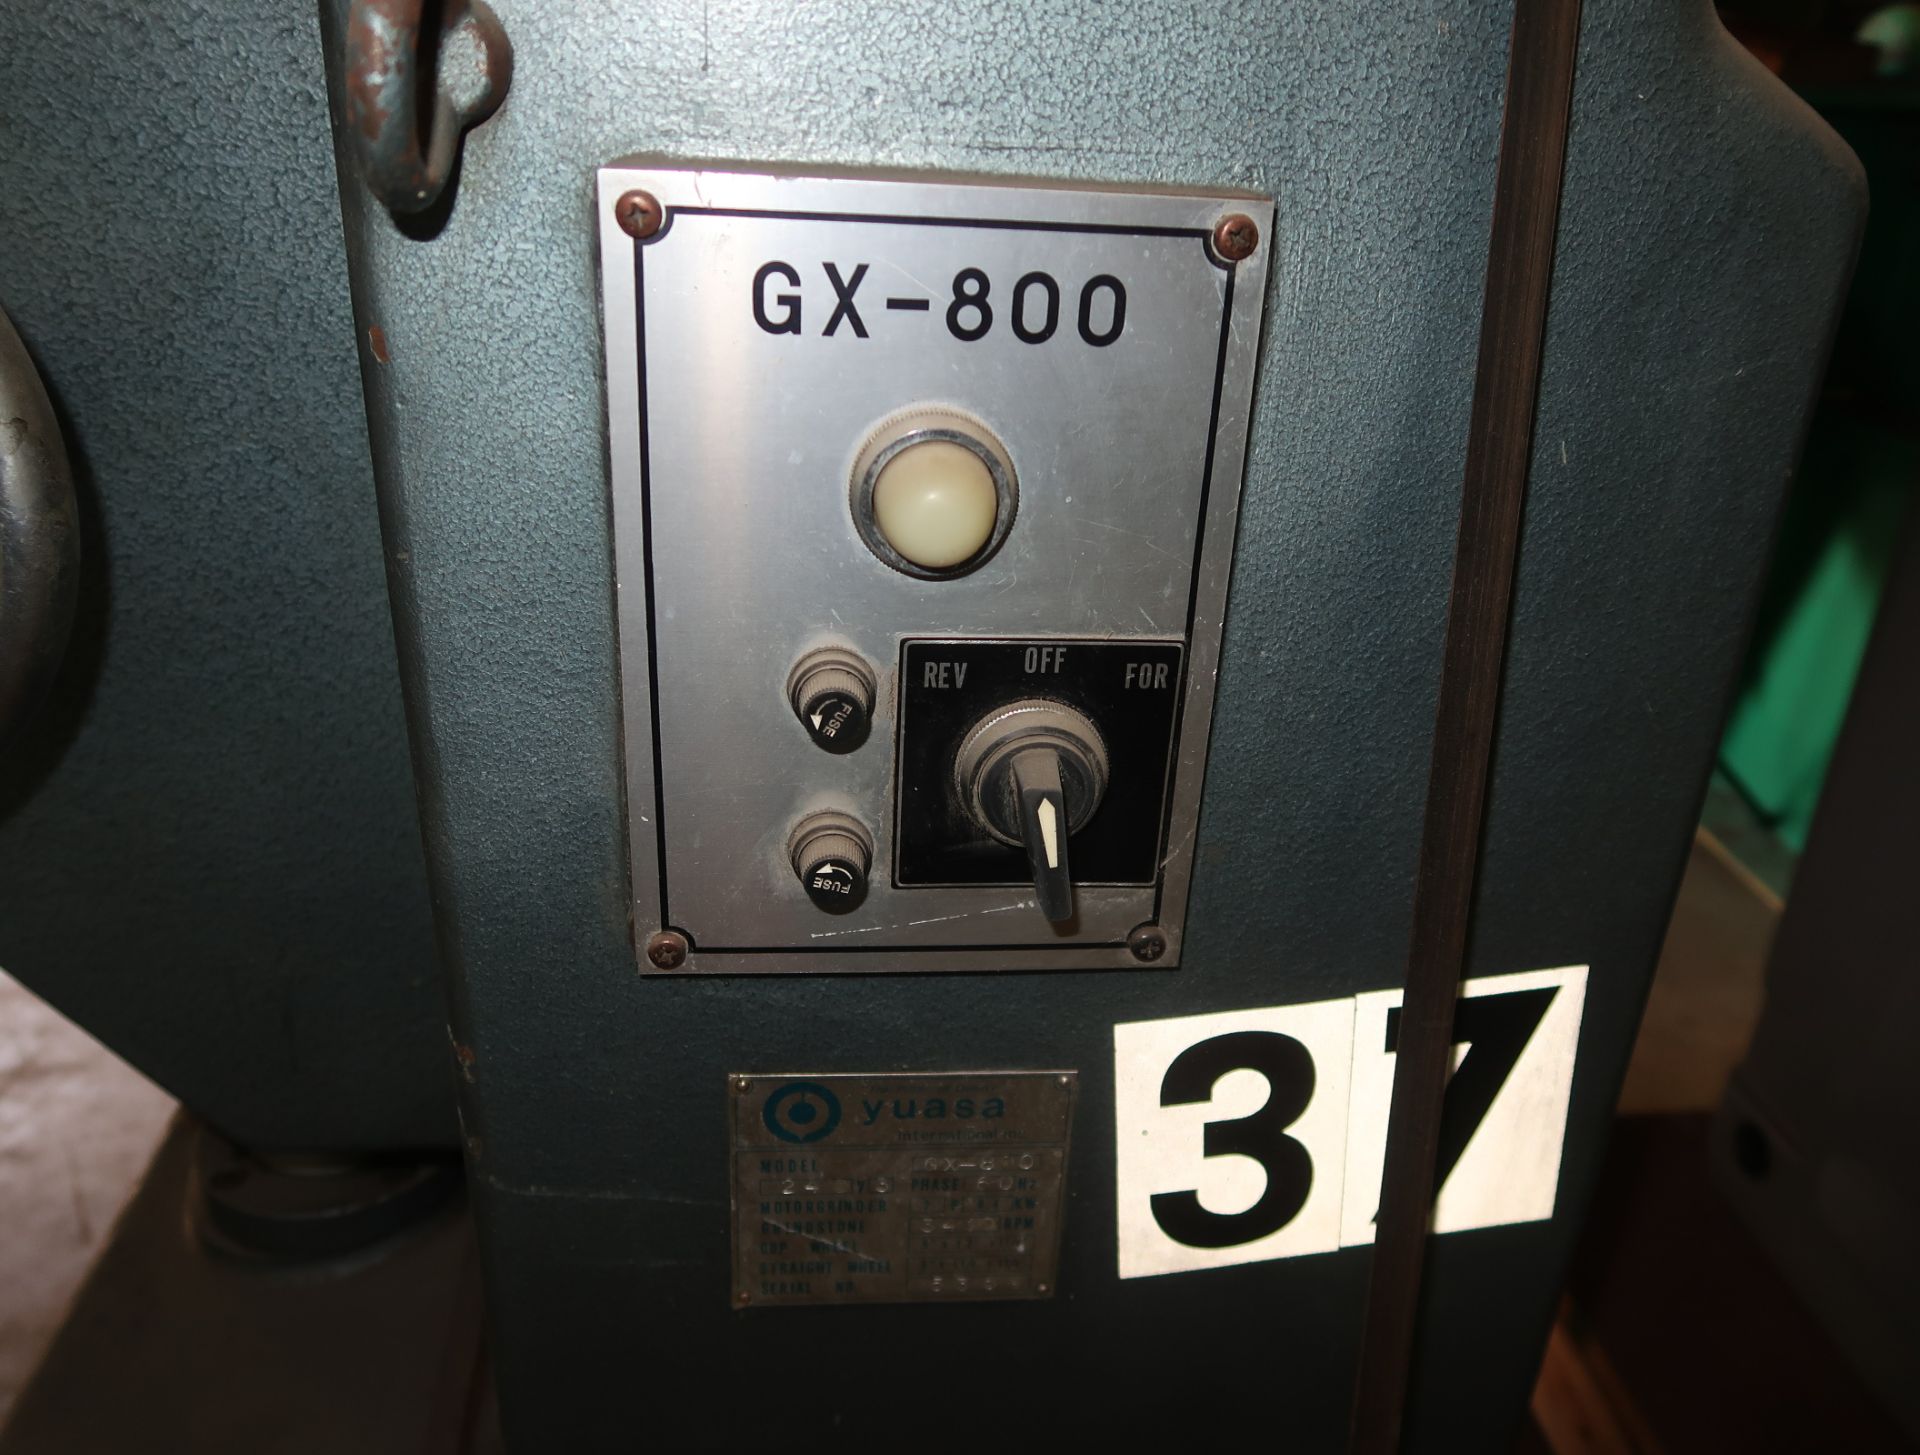 YUASA TOOL ROOM GRINDER MDL GX-800 SN. 5359 - Image 3 of 4